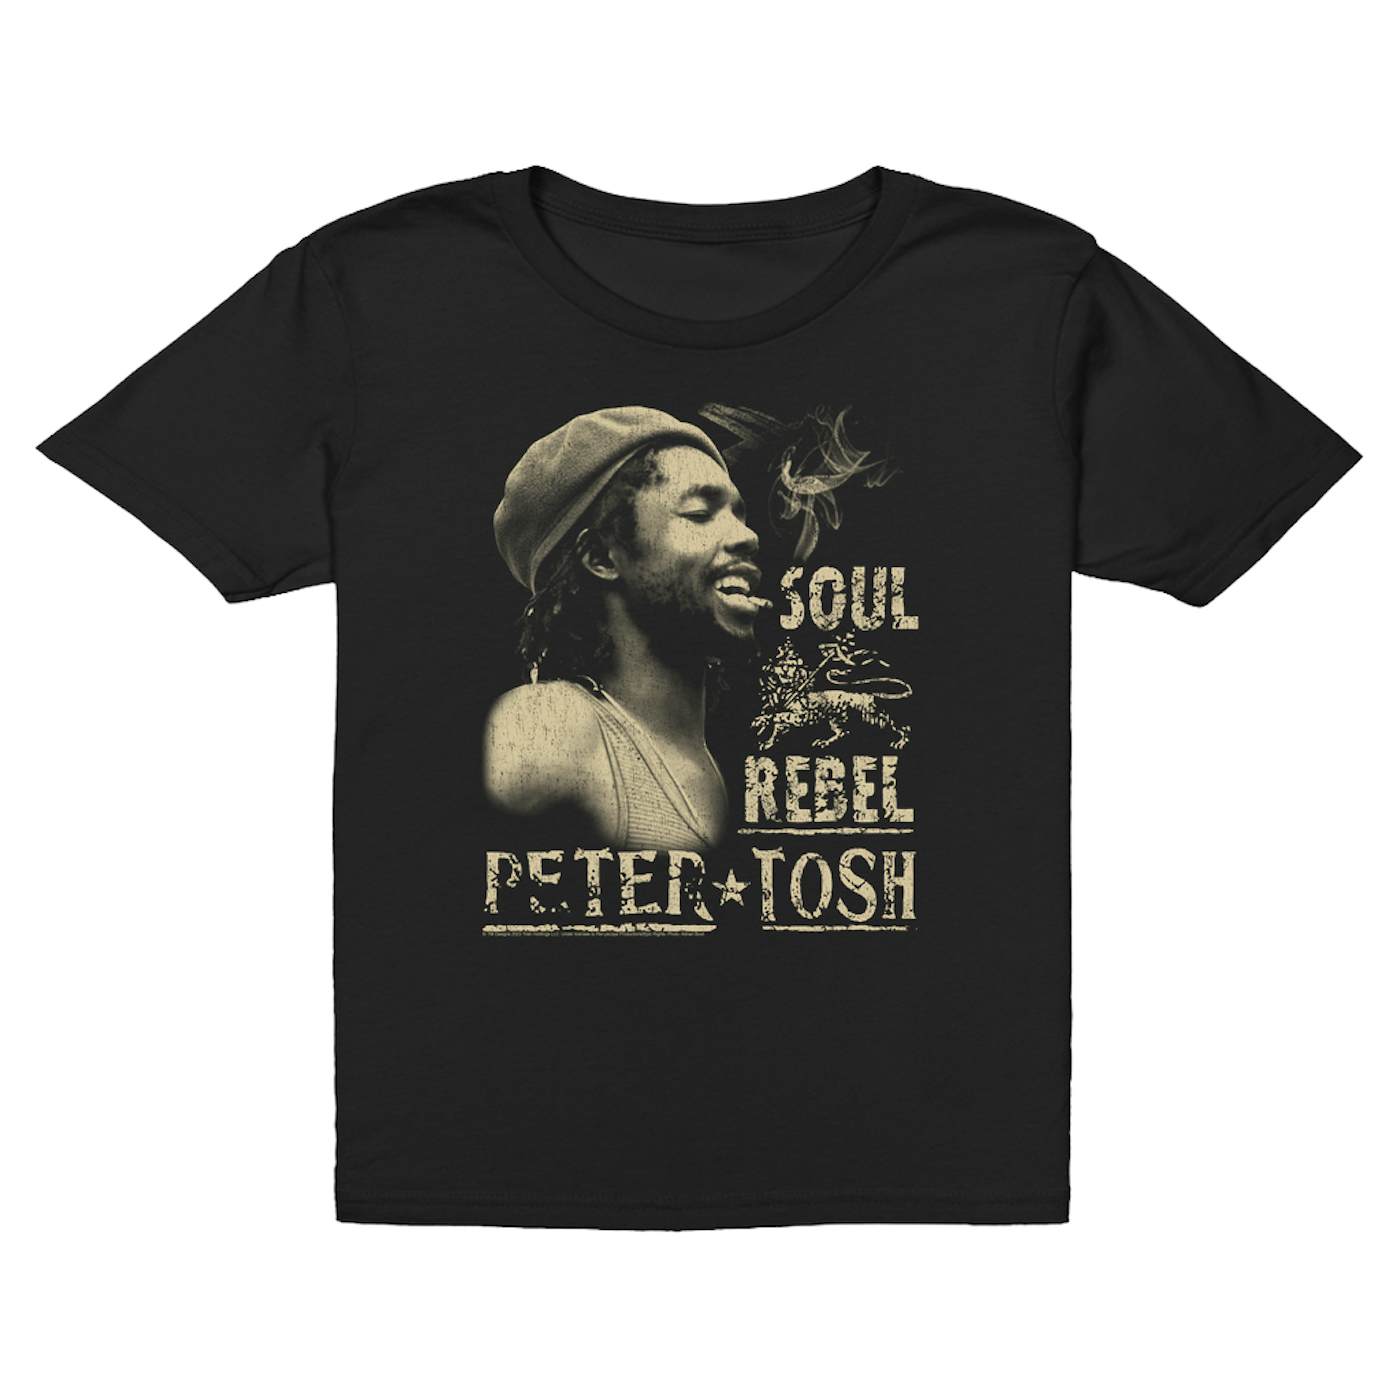 Peter Tosh Kids T-Shirt | Soul Rebel Peter Tosh Kids T-Shirt